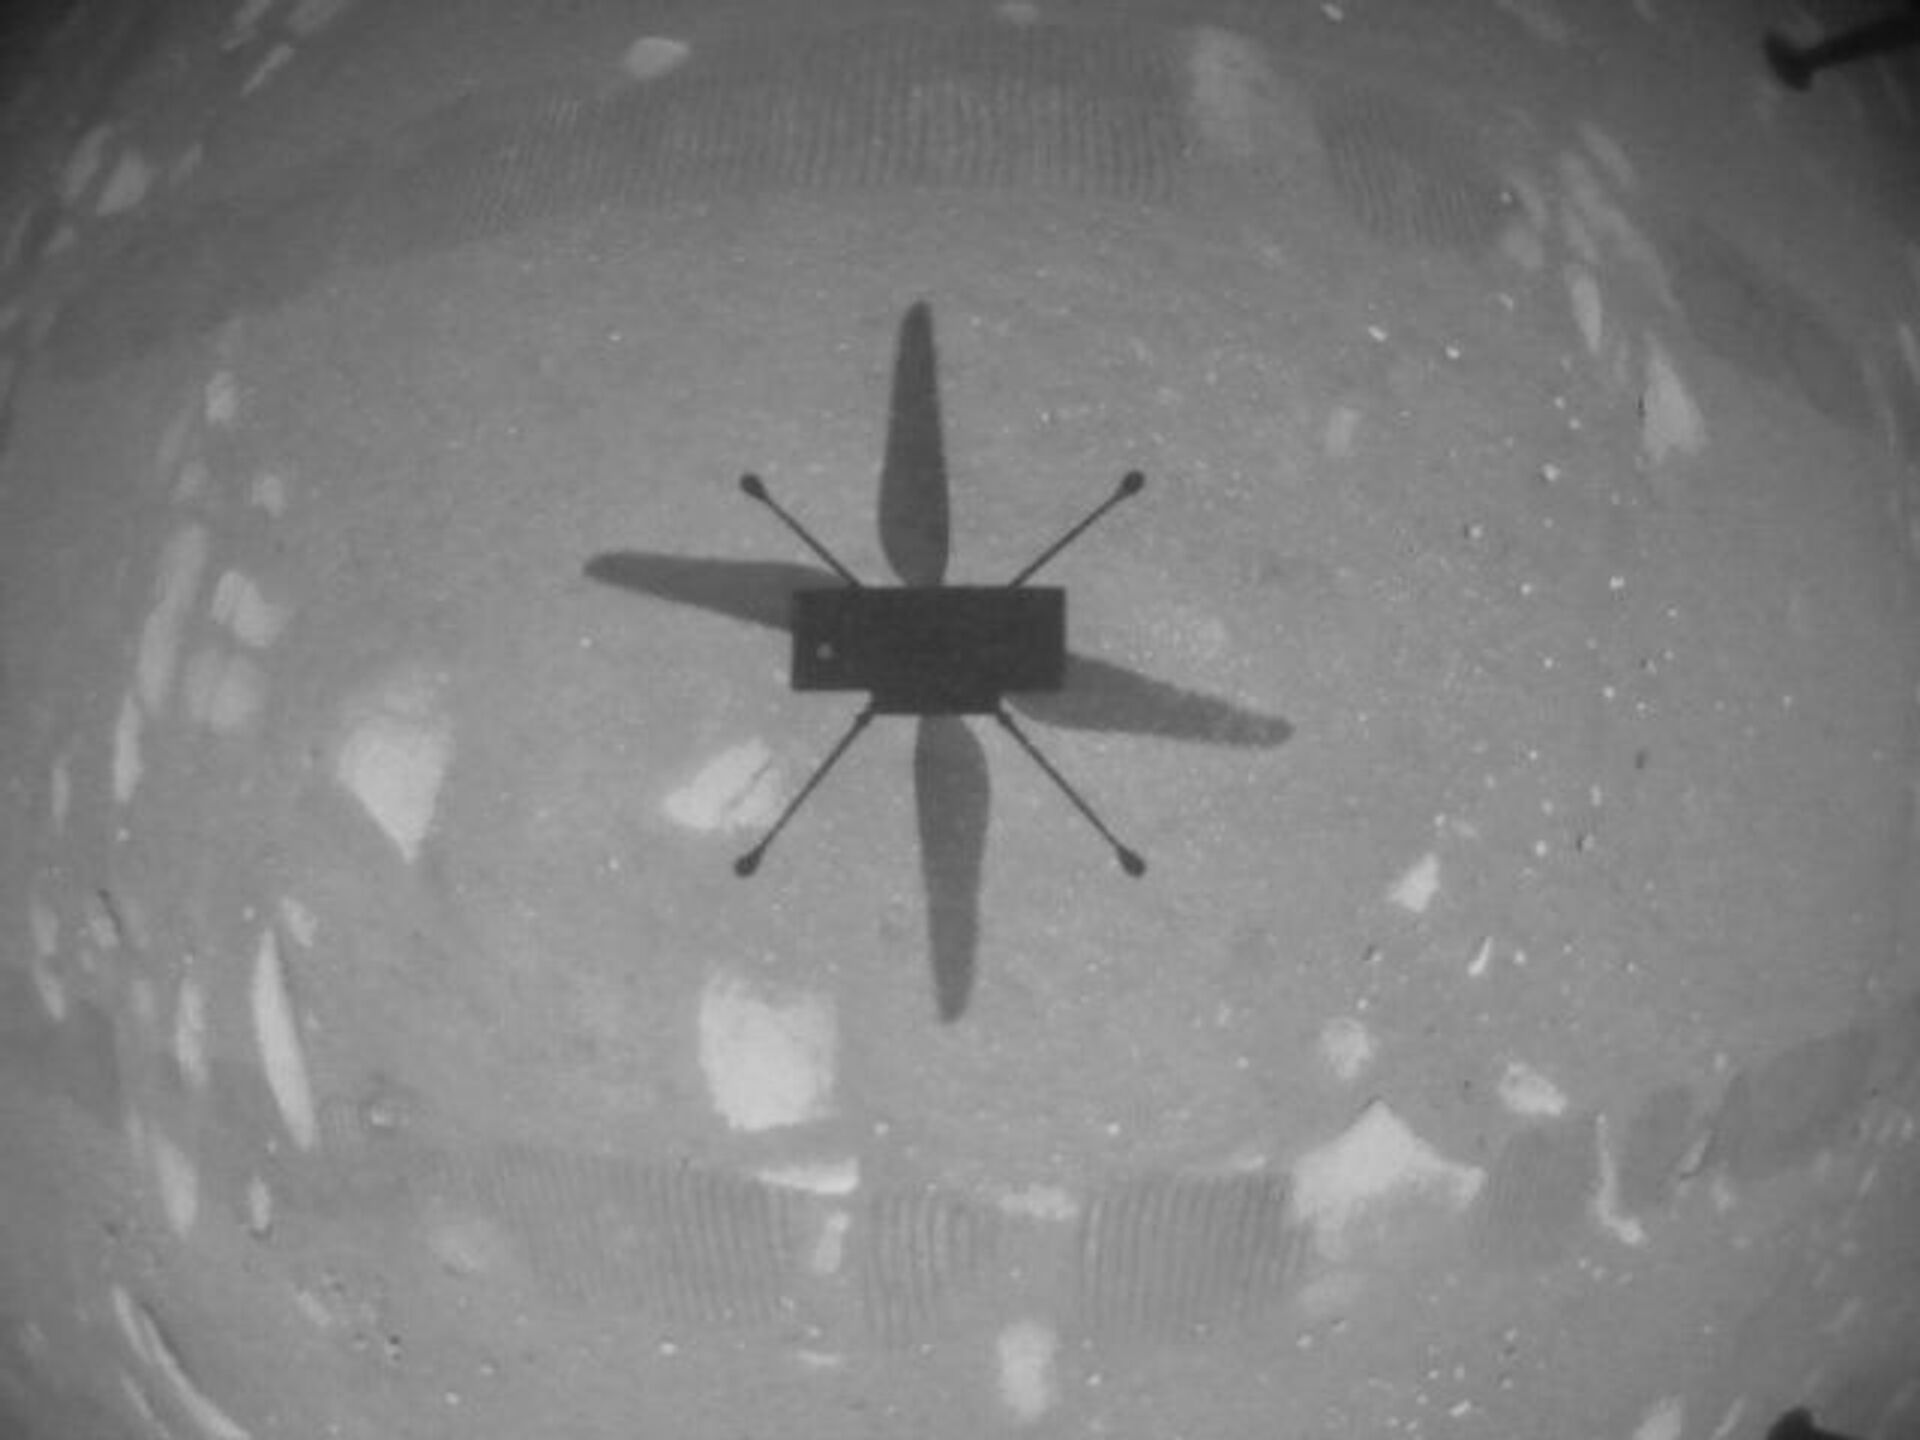 Mini-helicóptero Ingenuity da NASA registra sua 1ª IMAGEM de voo inaugural em Marte - Sputnik Brasil, 1920, 19.04.2021